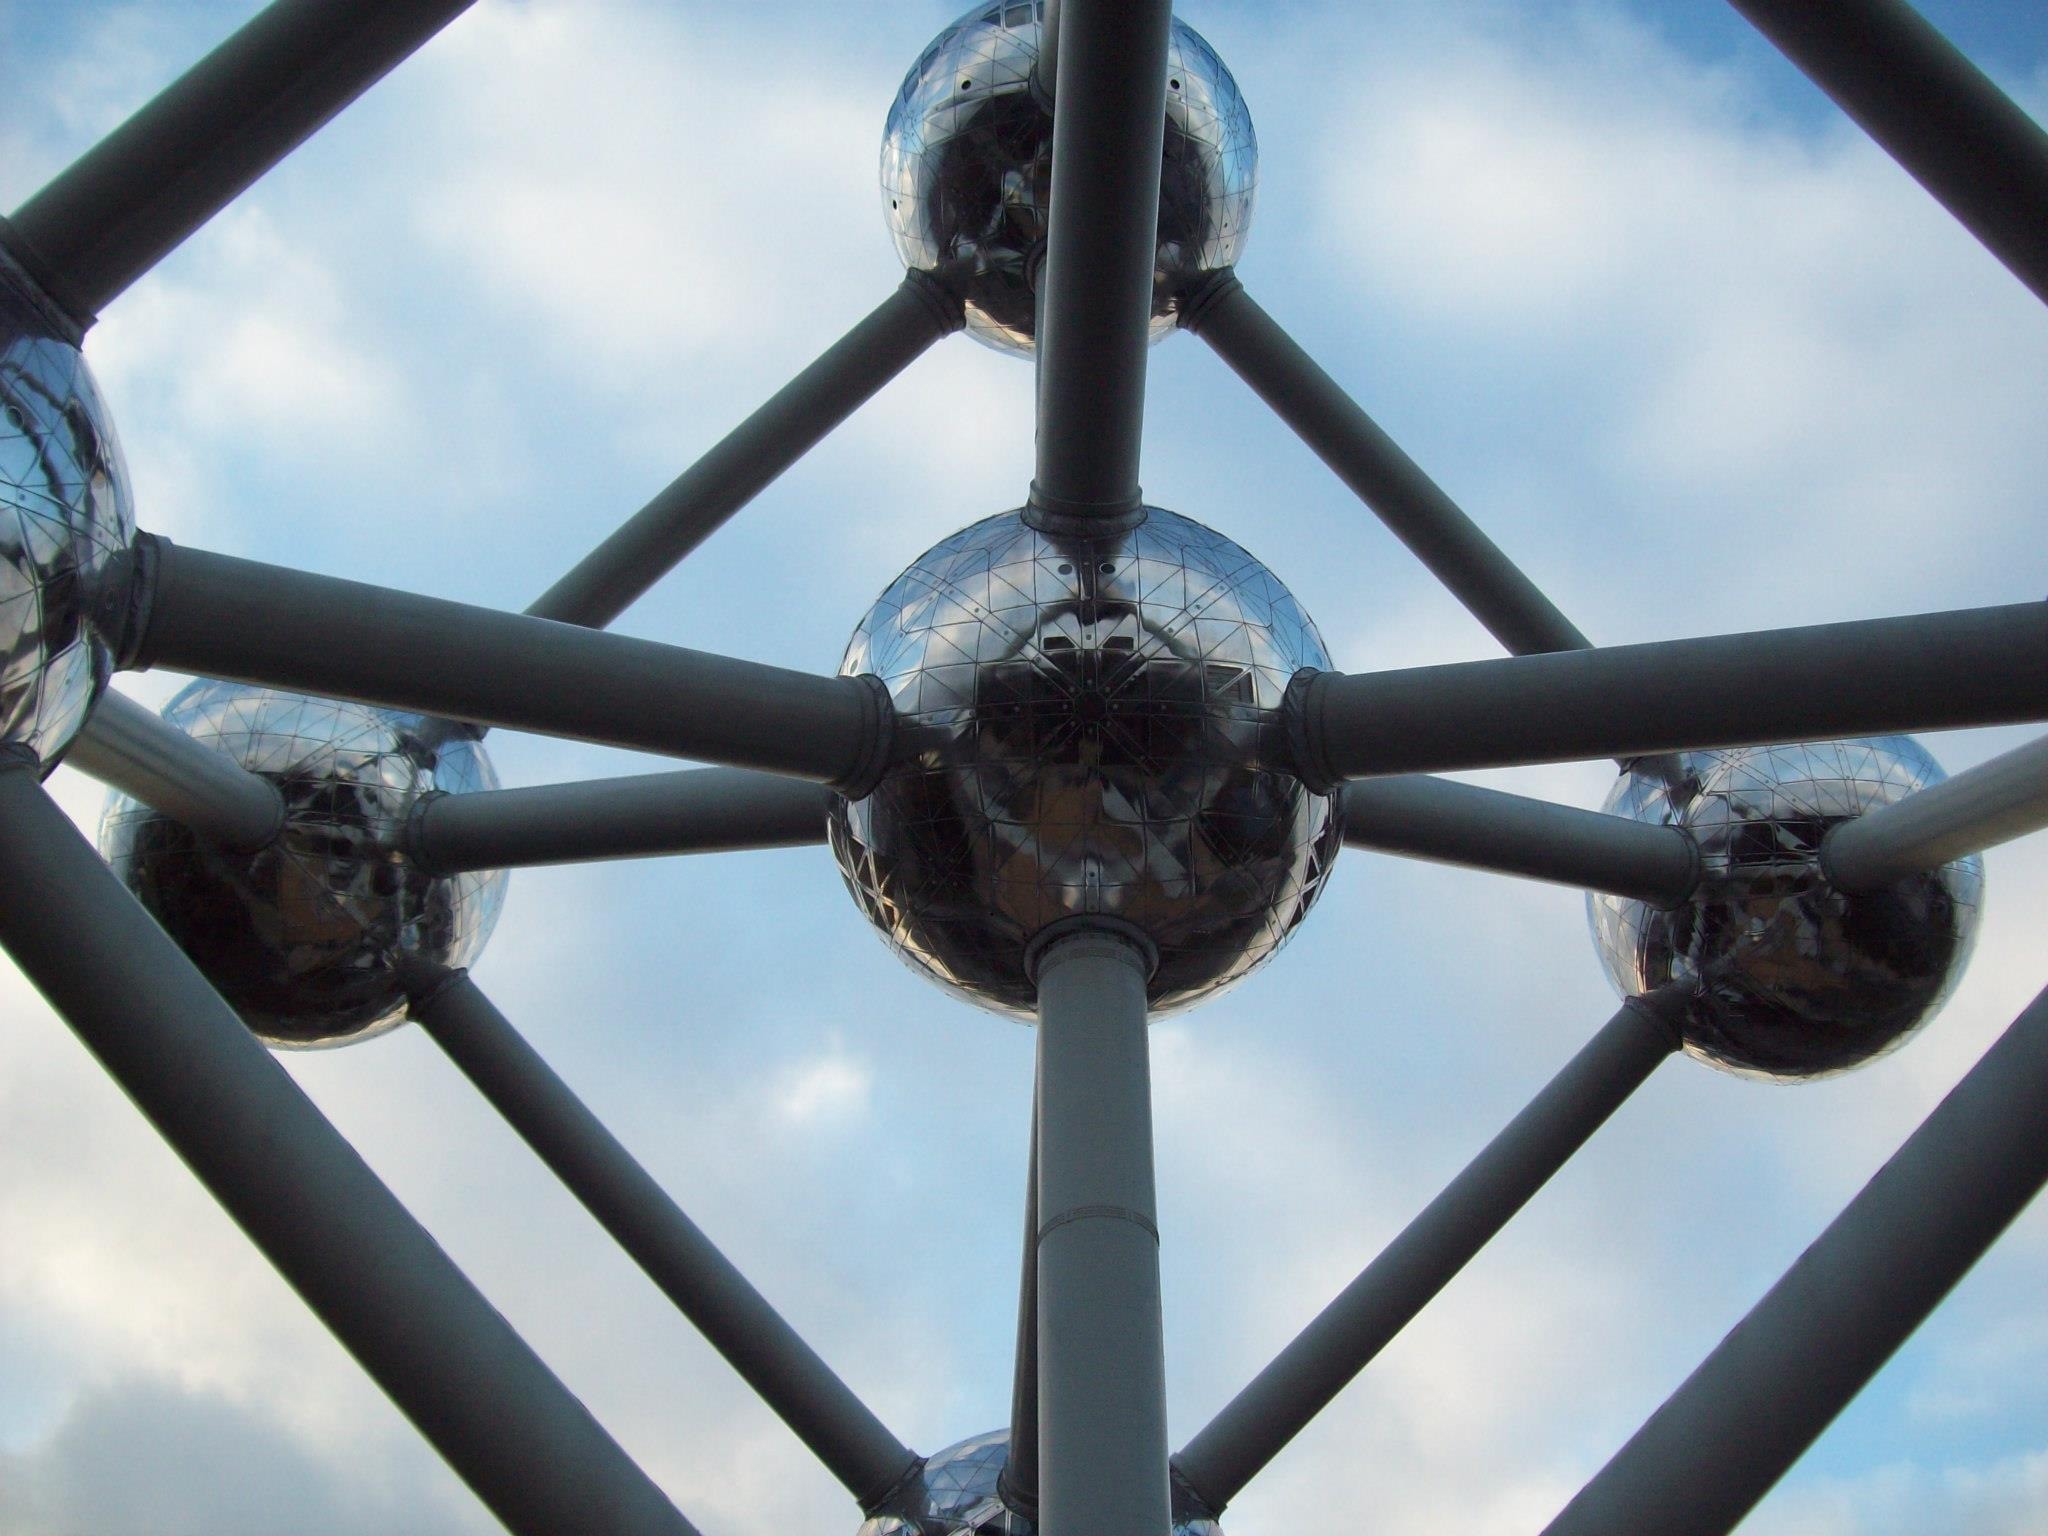 Brussels, Atomium, Atom, Molecule, wheel, outdoors